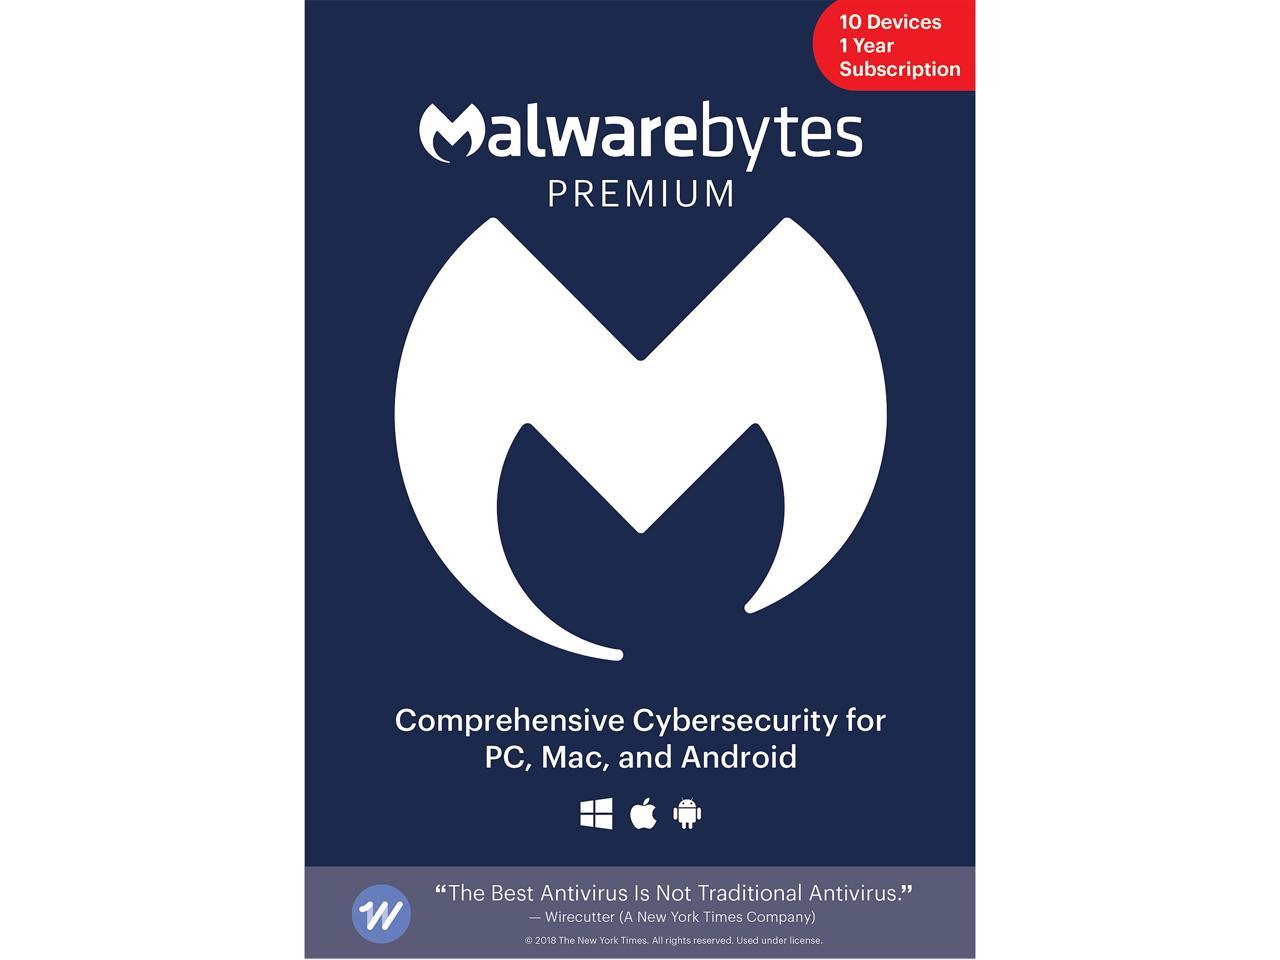 MalwareBytes Premium 4.5 (10 Devices, 1 Year) + NordVPN (6 Devices, 1 Year) @ Newegg $42.99